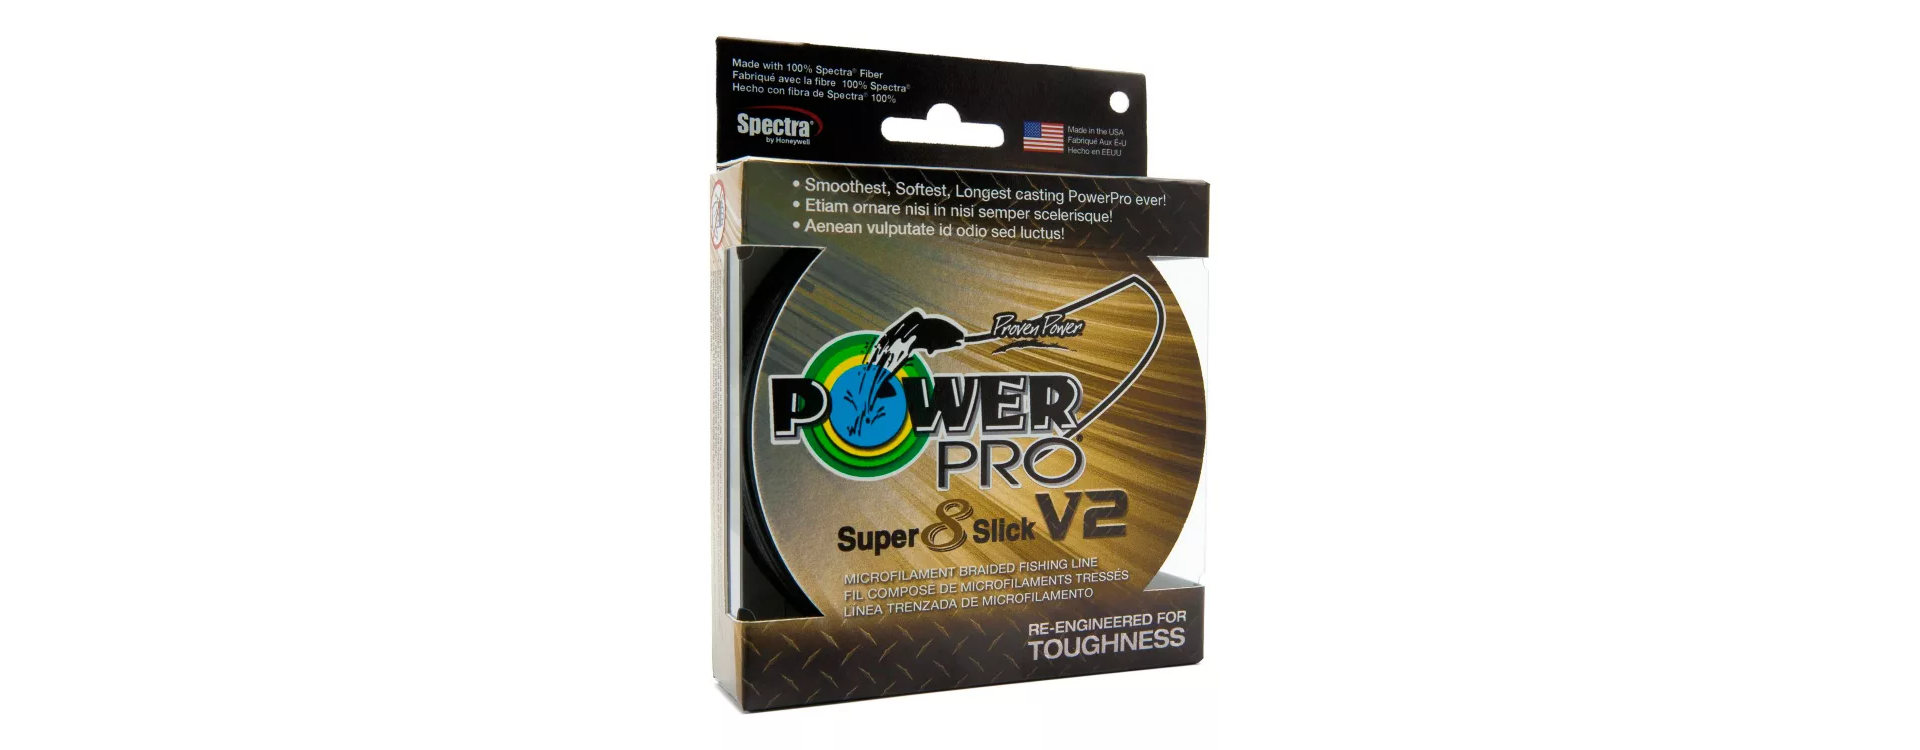 Powerpro Super 8 Slick V2 Braid Line